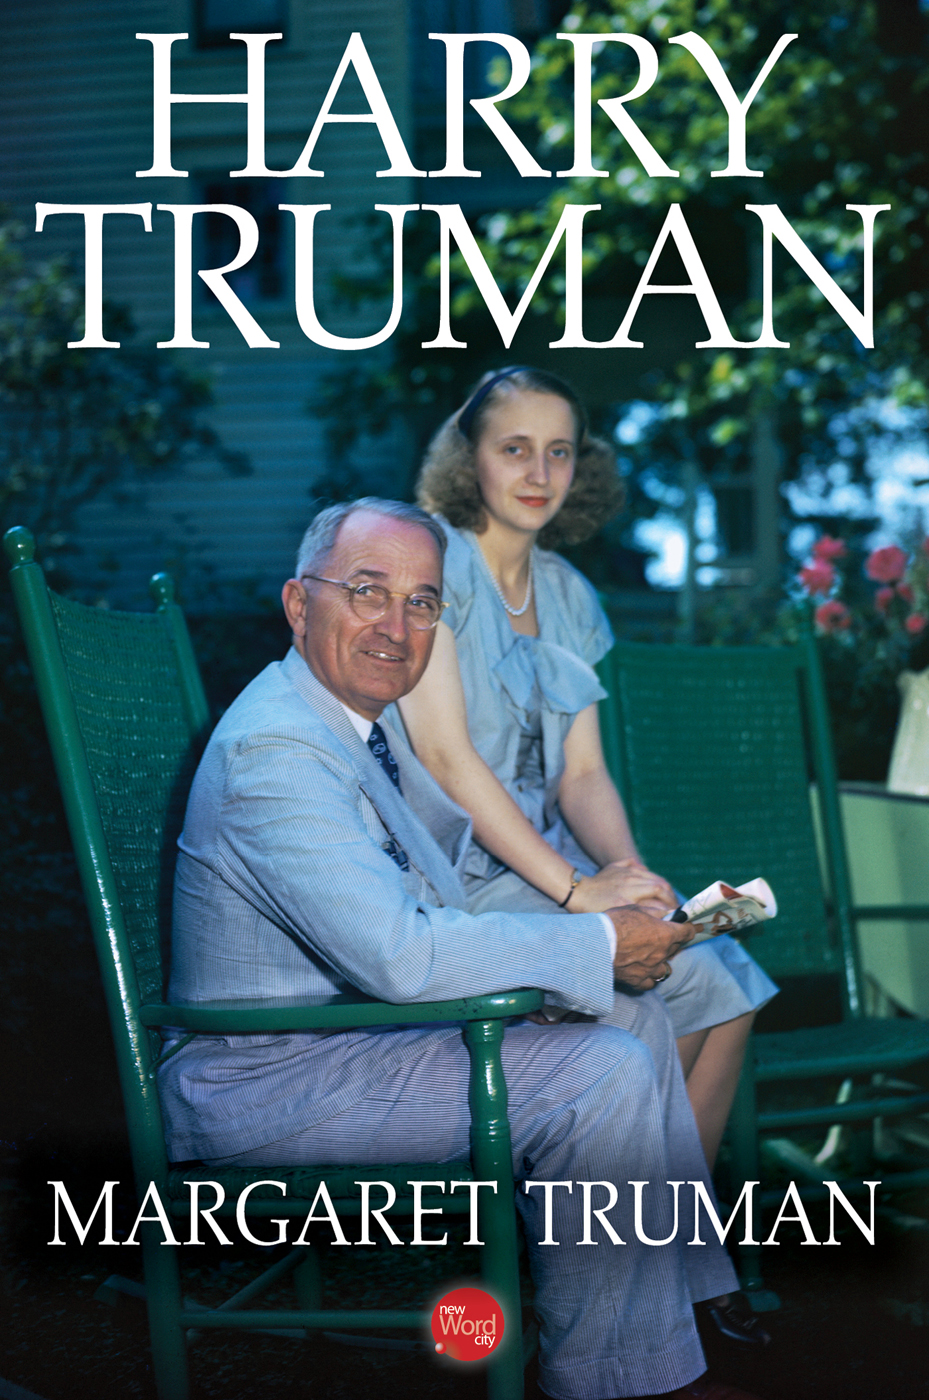 Harry Truman (2015) by Margaret Truman